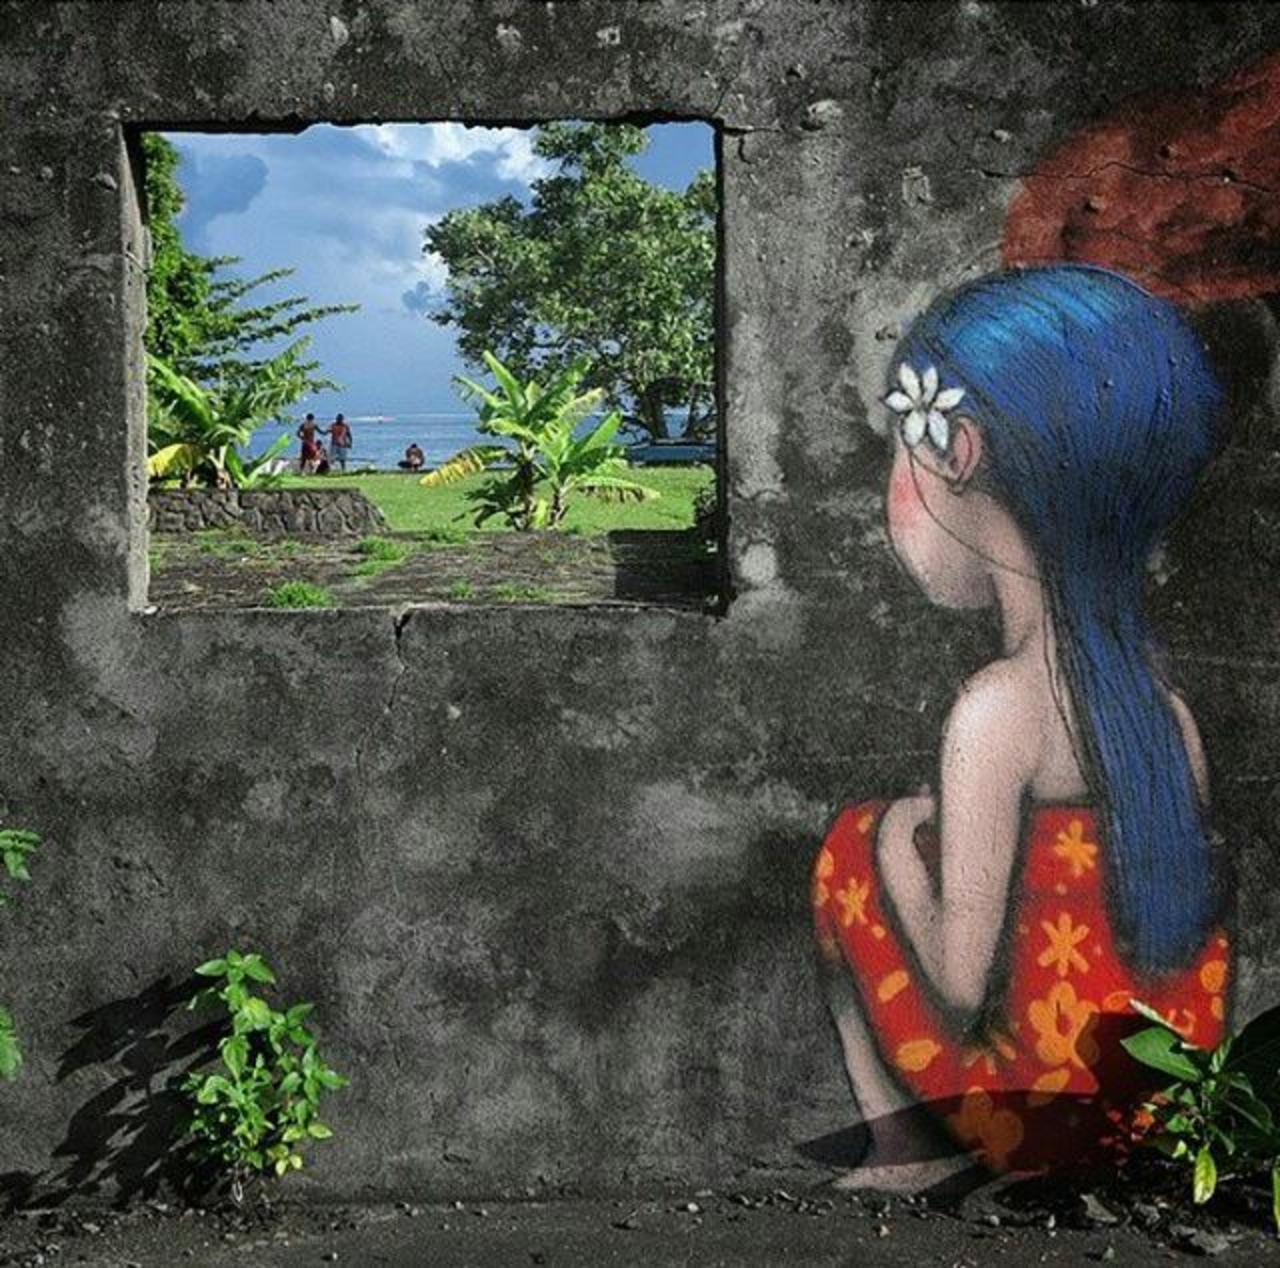 RT @ACrazeMusic: Let
Your view
See the heart
Within you...

#vss
“@GoogleStreetArt: Seth Globepainter in Tahiti 

#graffiti #streetart http://t.co/fODQnRSxNK